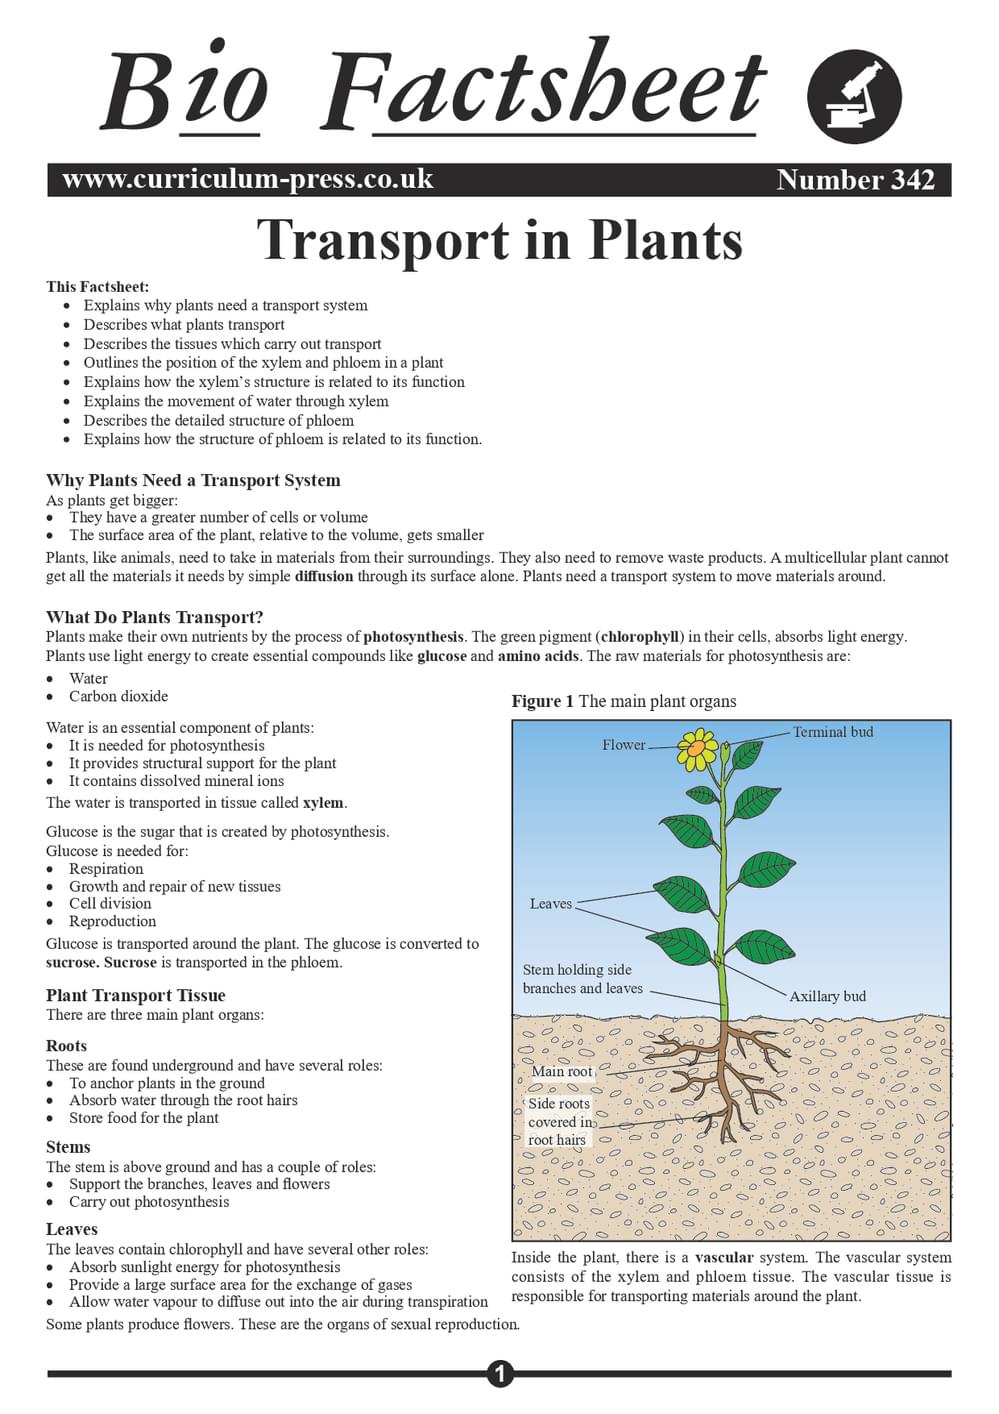 Transport in Plants - Curriculum Press